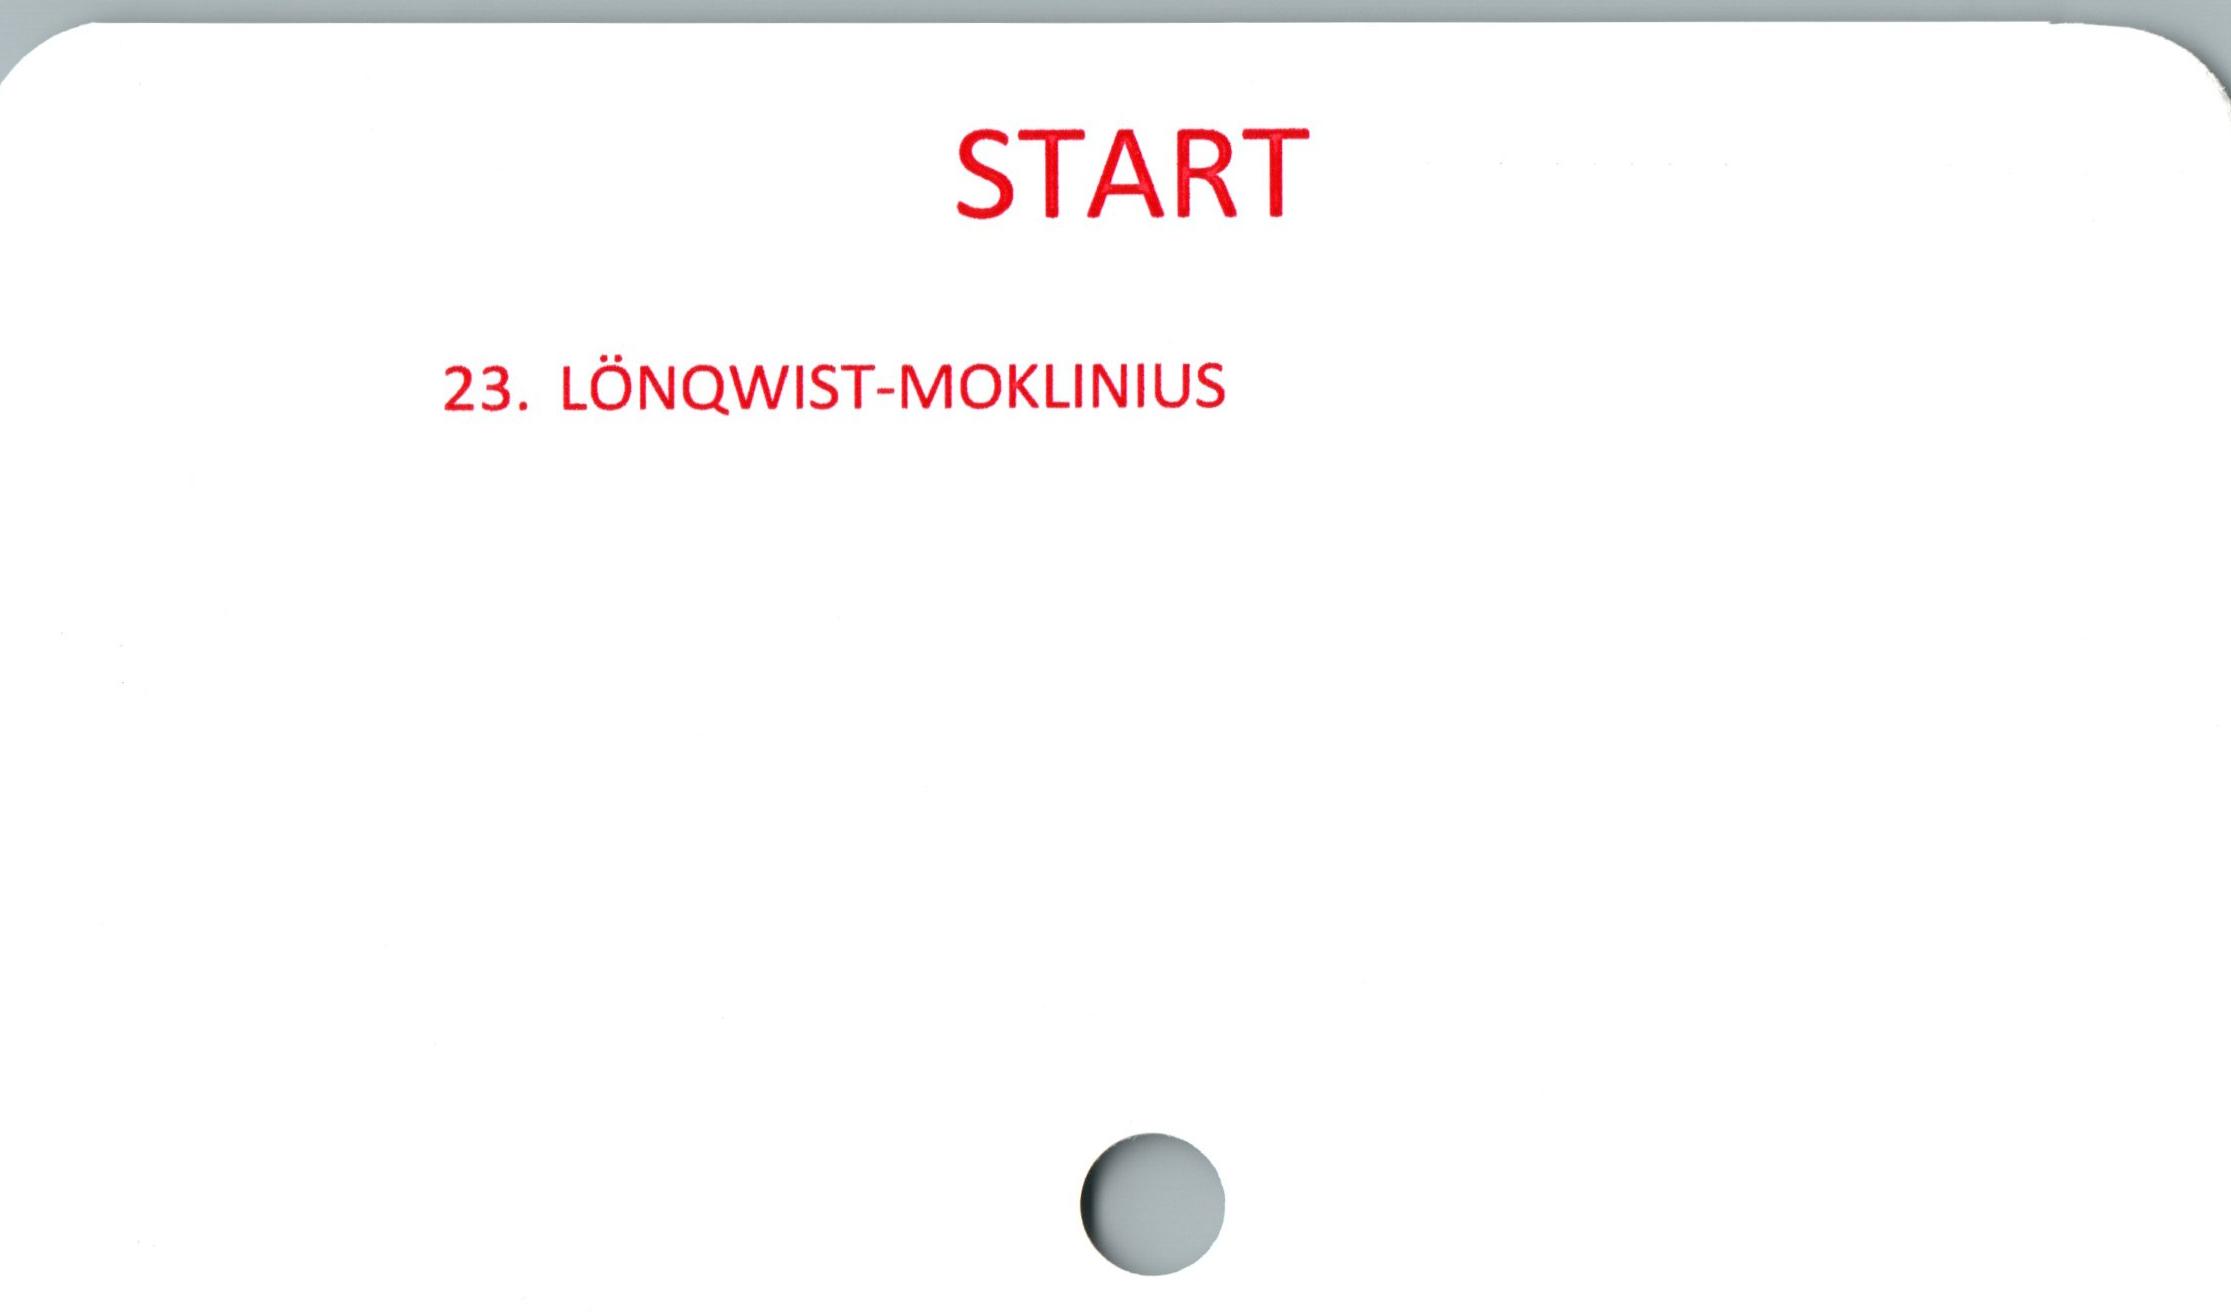  ﻿START

23. LÖNQWIST-MOKLINIUS